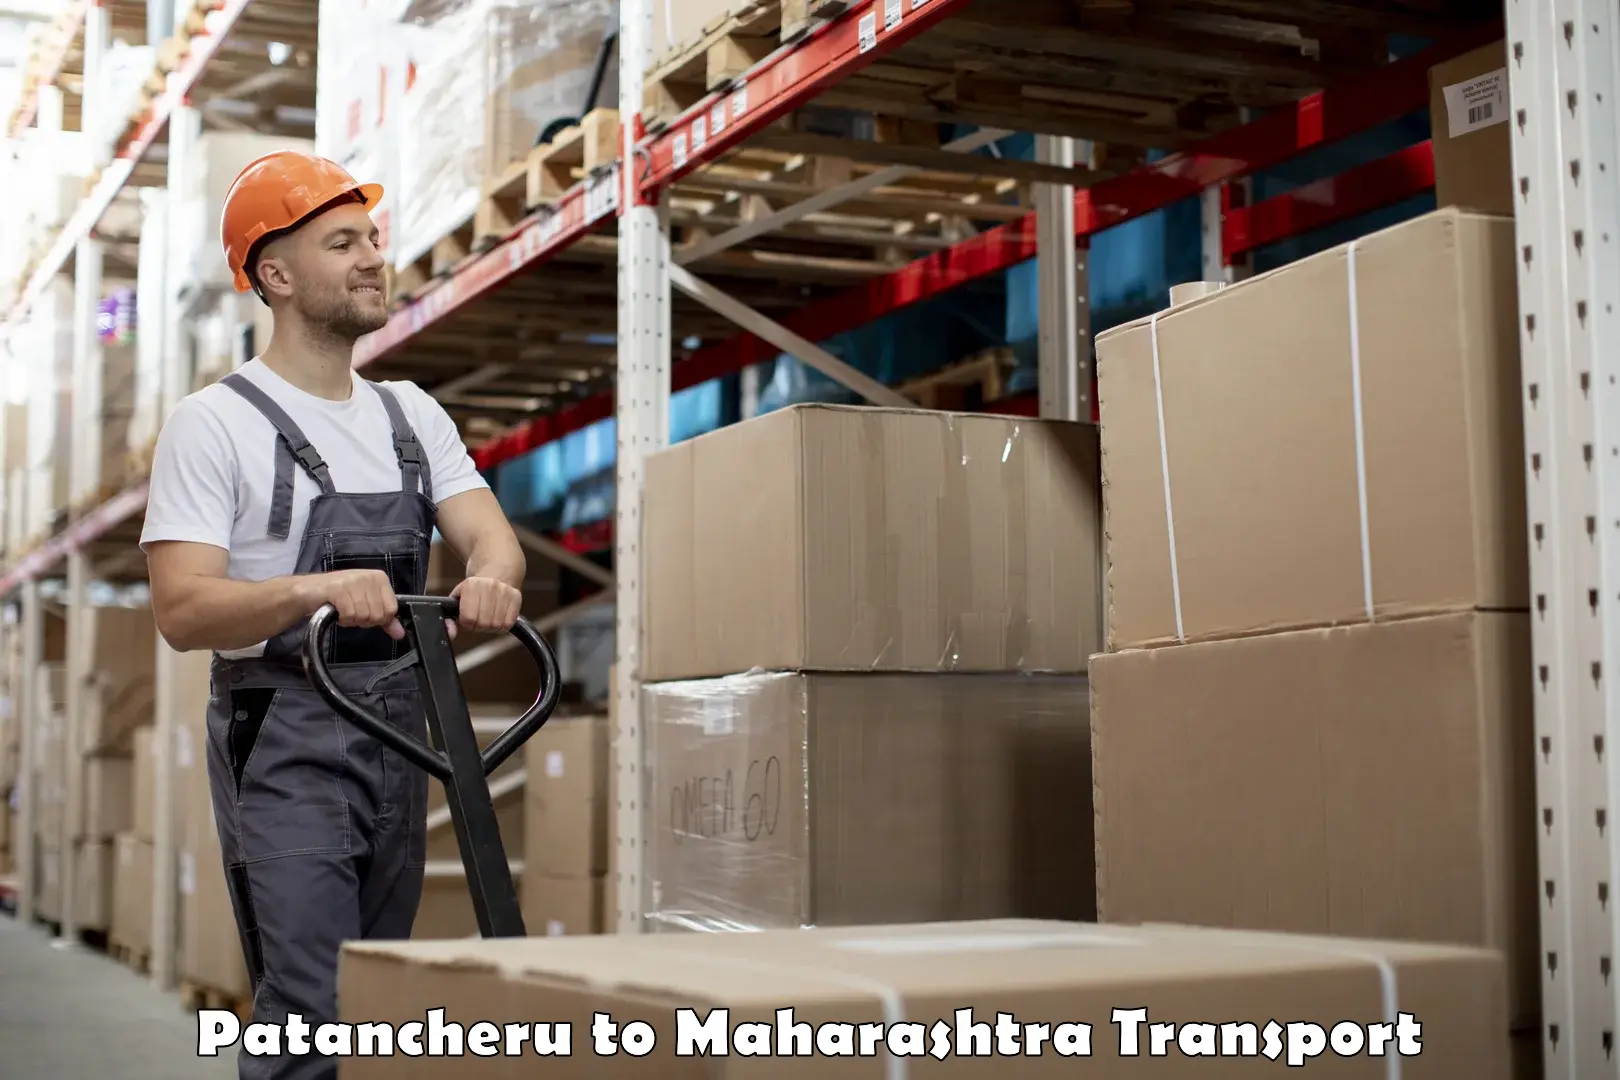 Truck transport companies in India Patancheru to DY Patil Vidyapeeth Mumbai